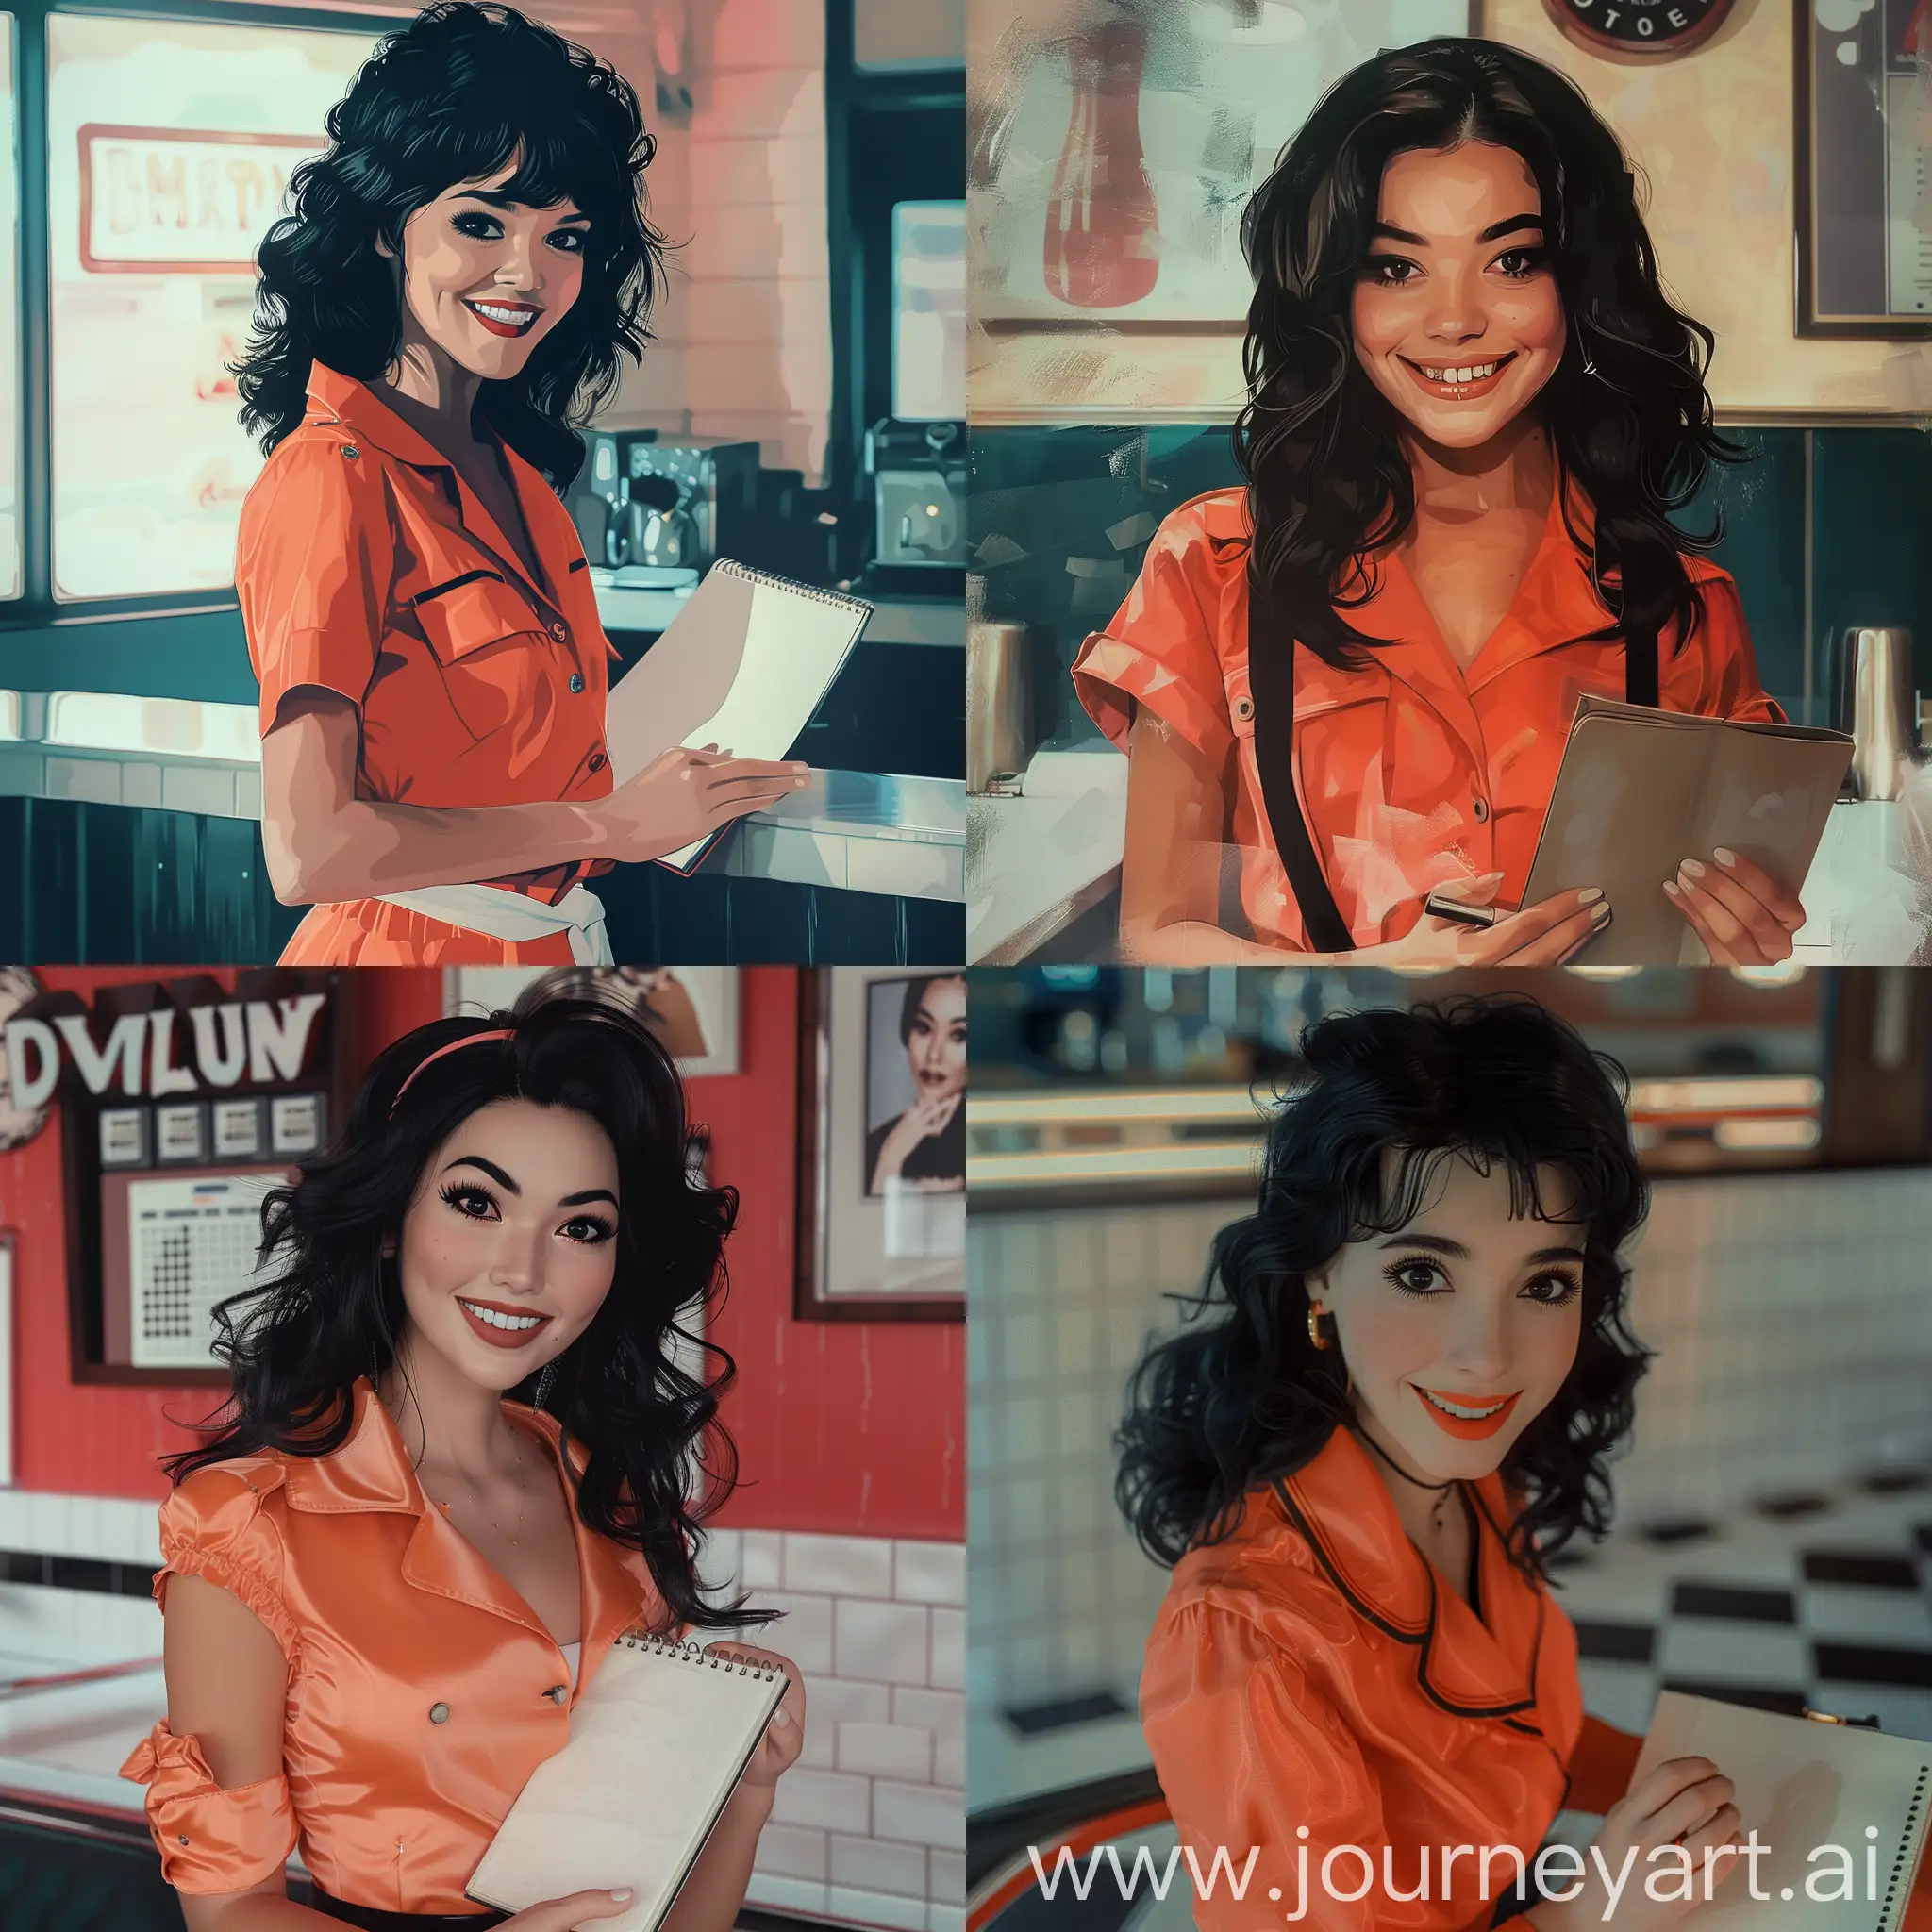 Retro-80s-Sexy-Waitress-Serving-with-Smiles